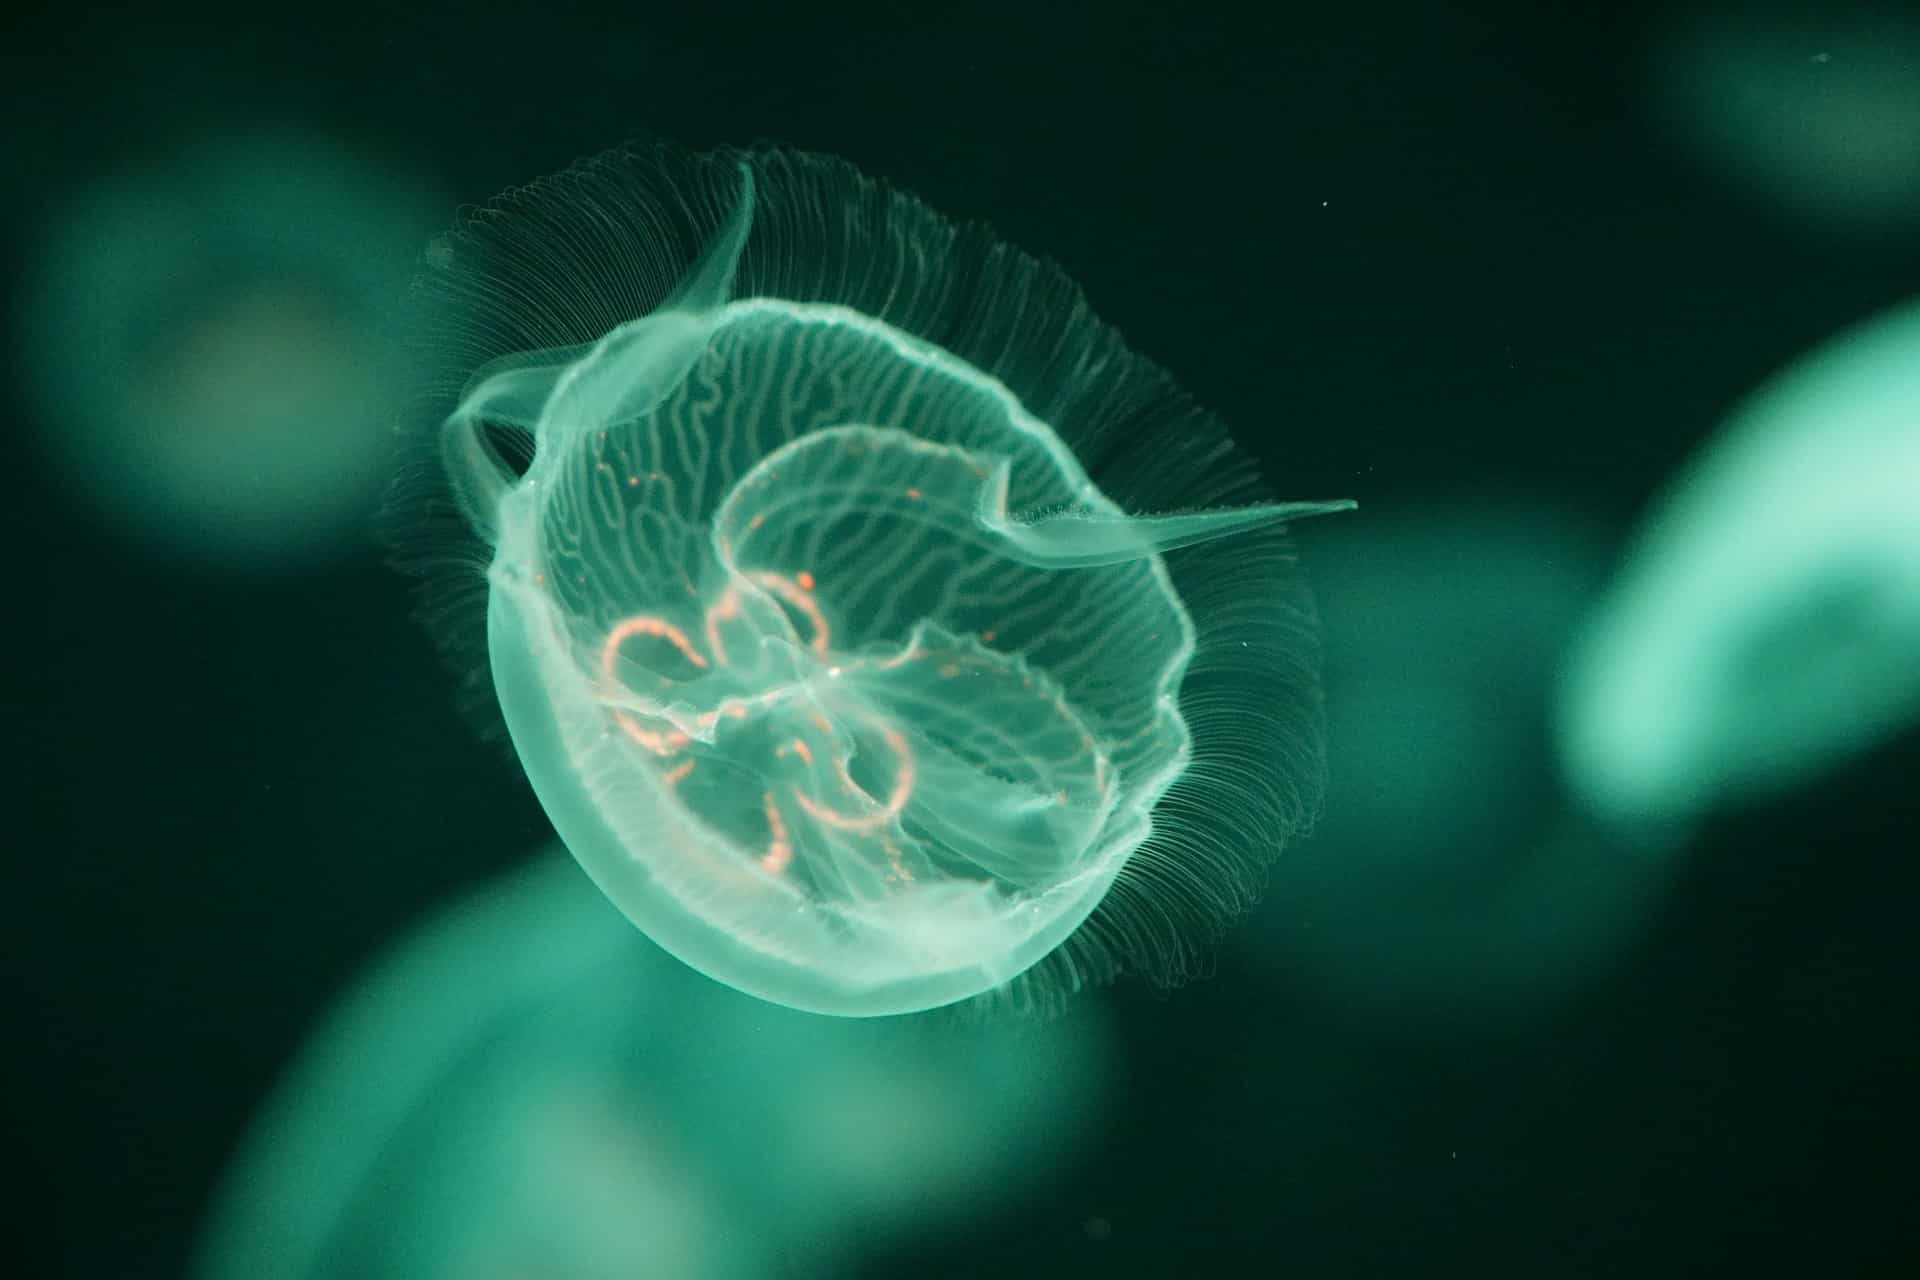 Jellyfish (Image by Gayathiri Gengatharan from Pixabay)